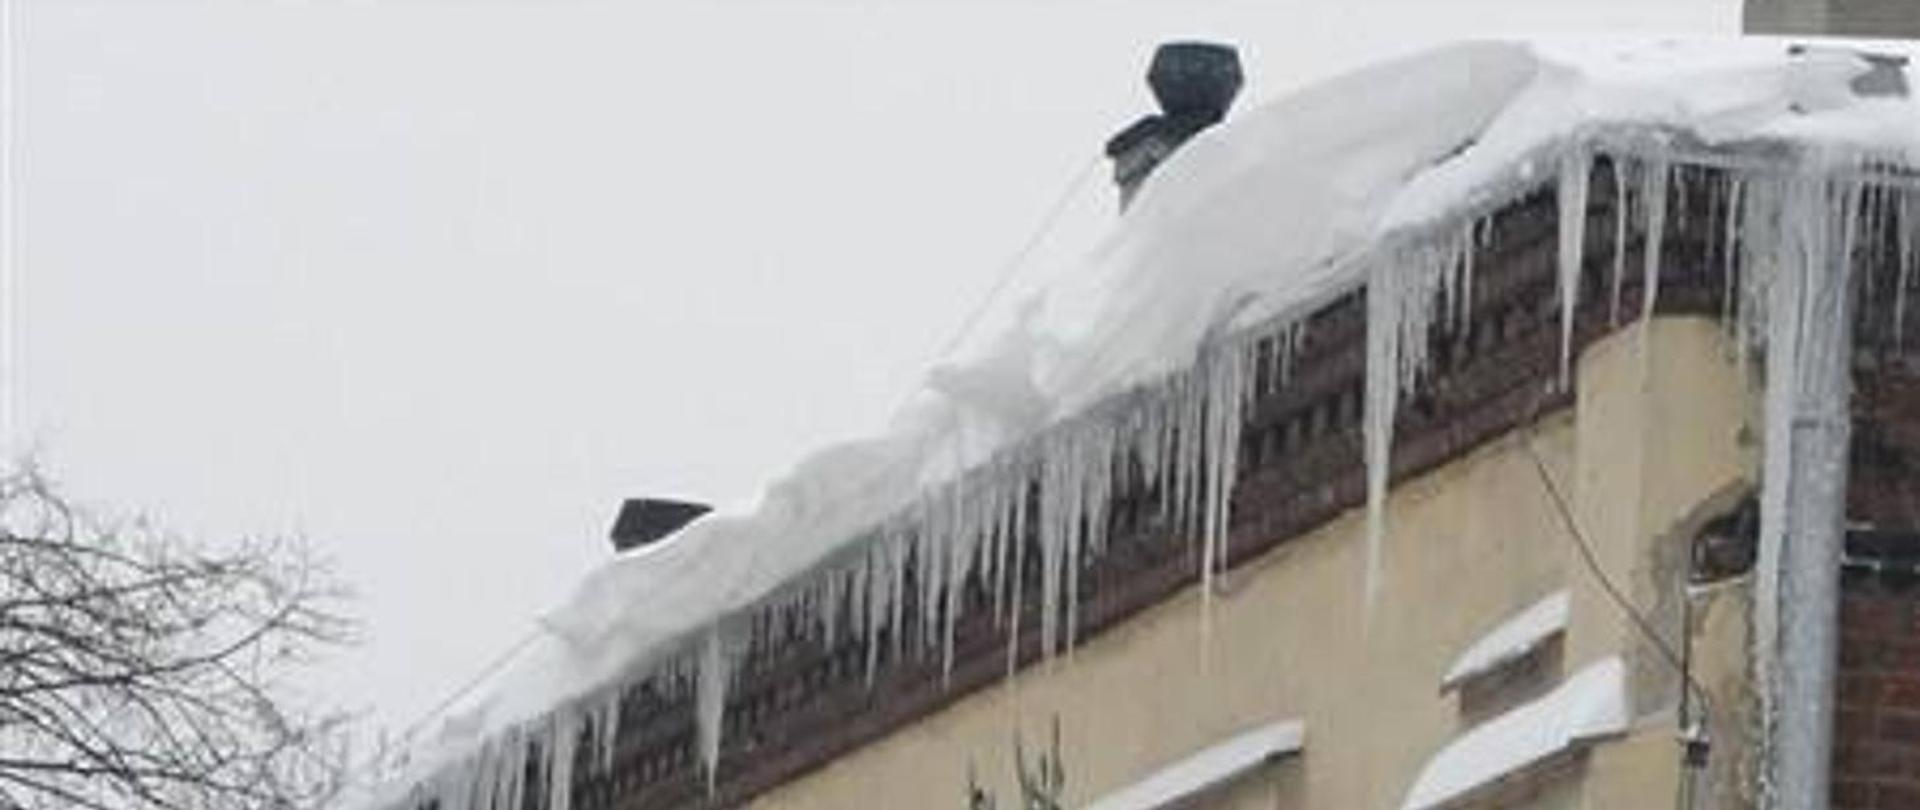 Zdjęcie obrazuje śnieg i sople na dachu budynku